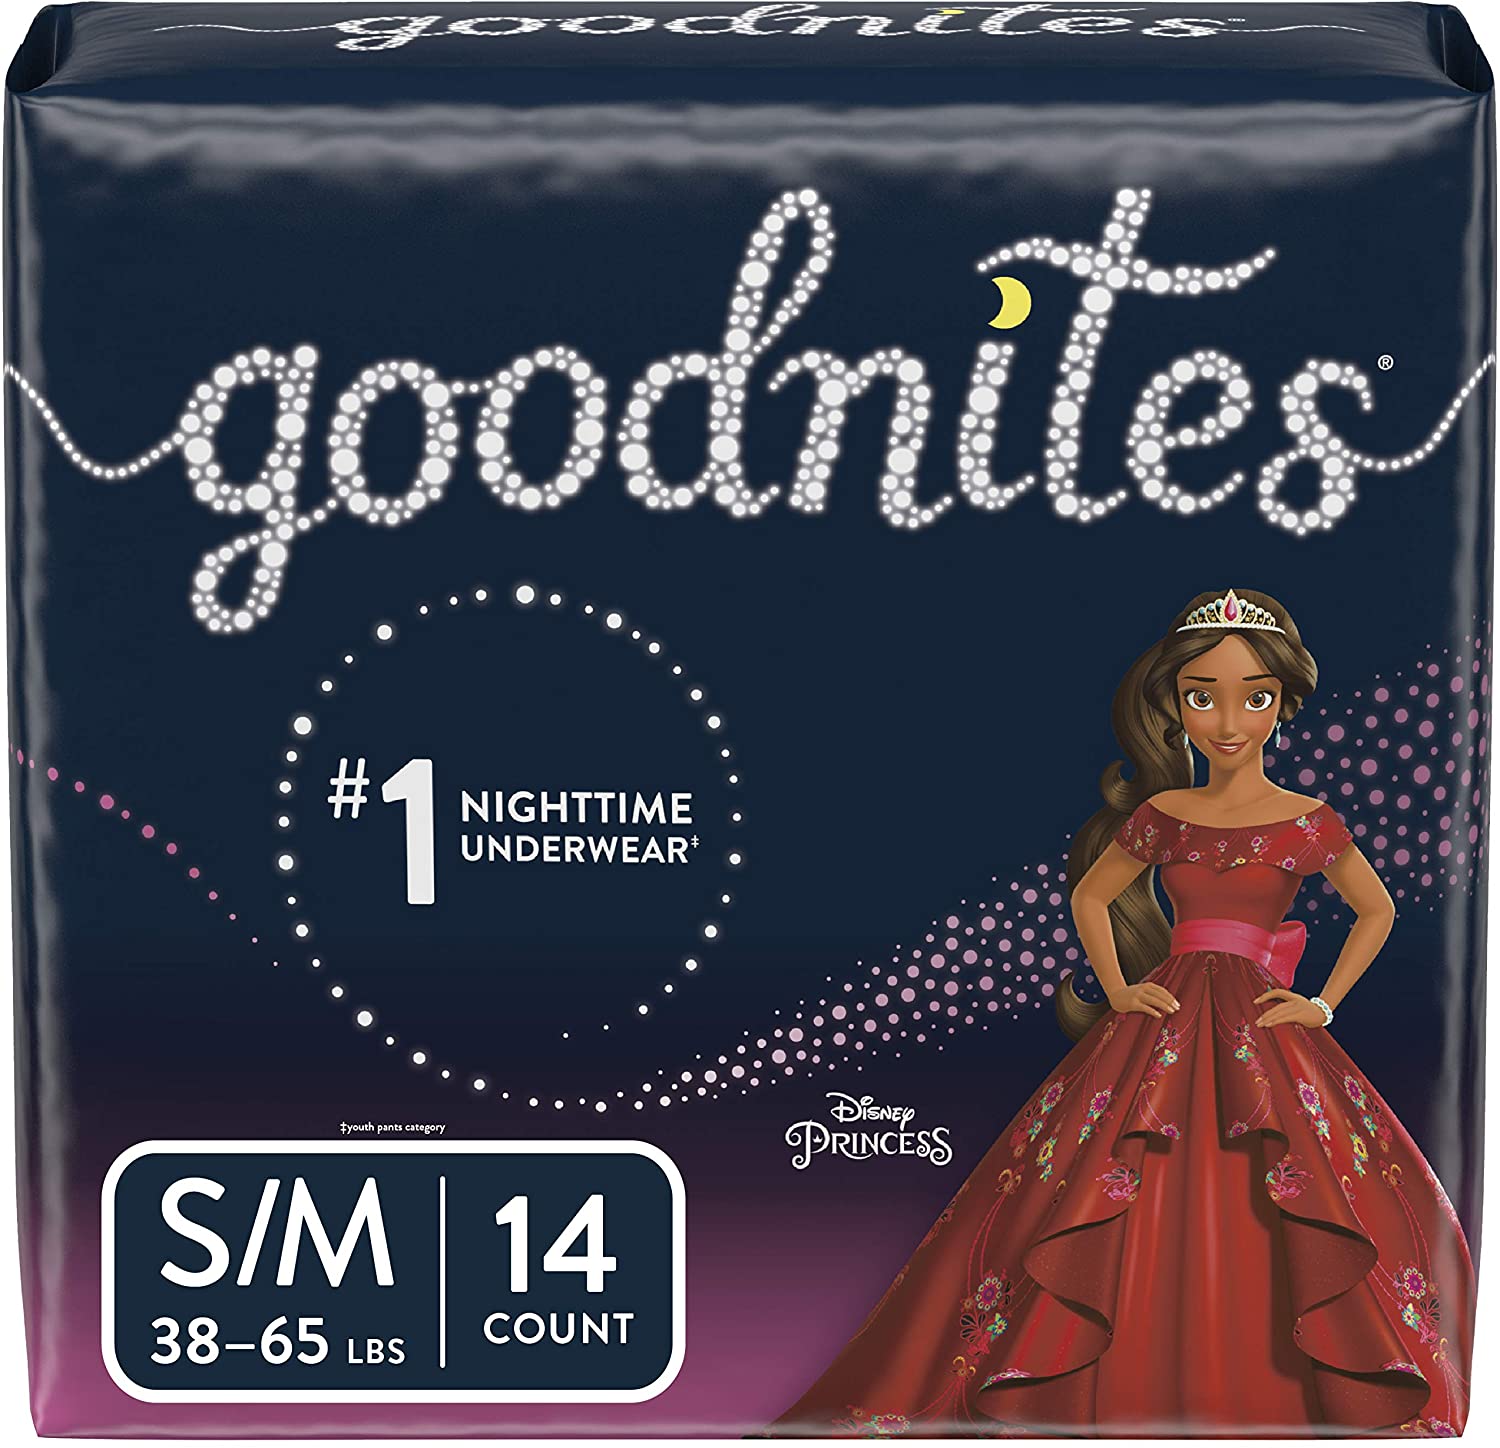 GoodNites Nighttime Underwear for Girls, Small-Medium - 44 count